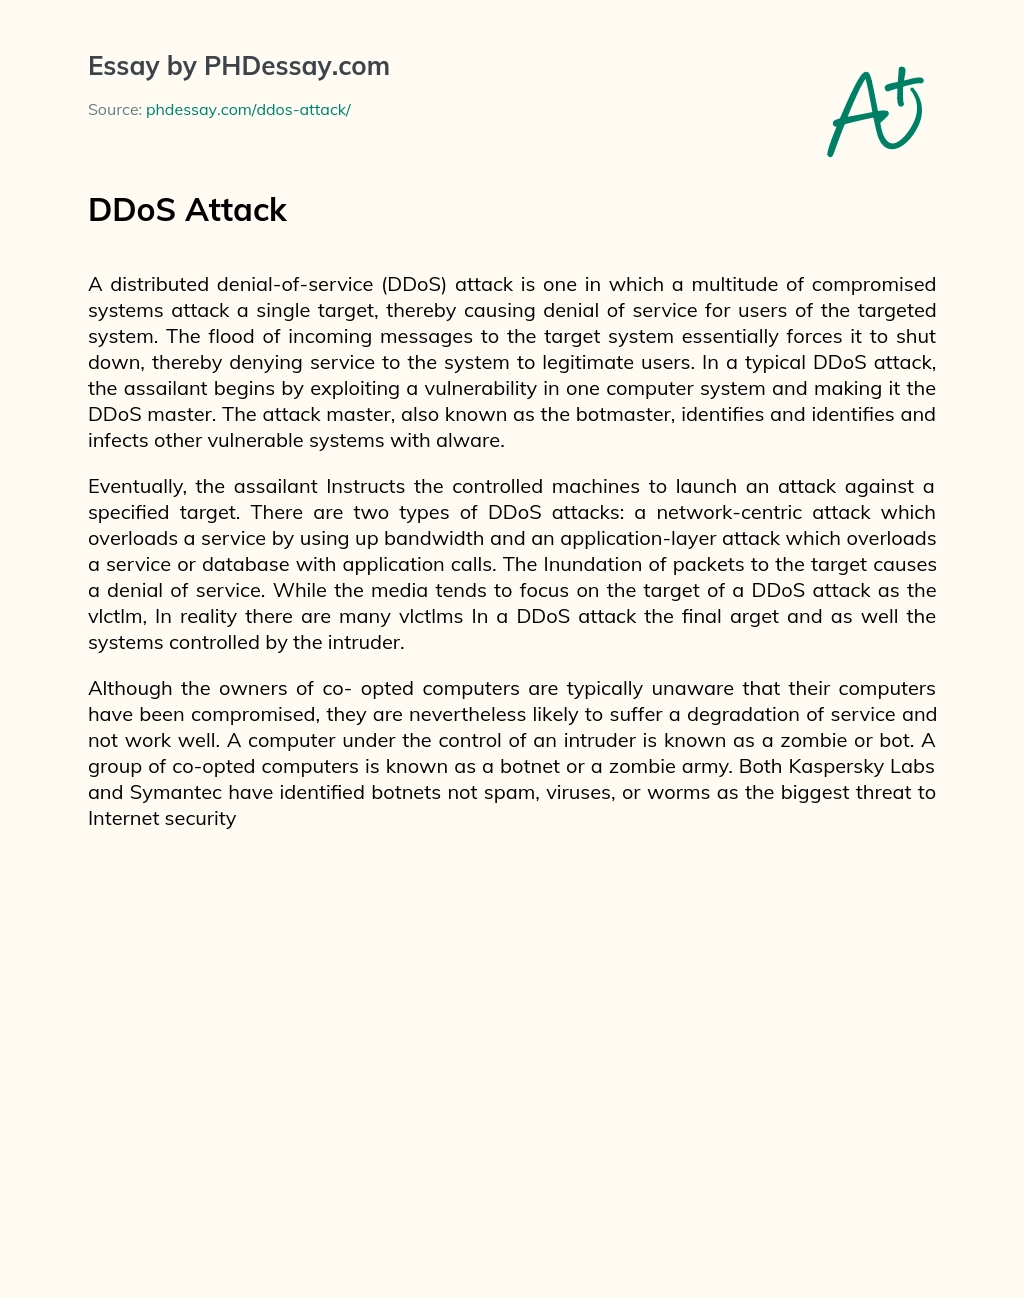 Understanding Distributed Denial-of-Service (DDoS) Attacks essay